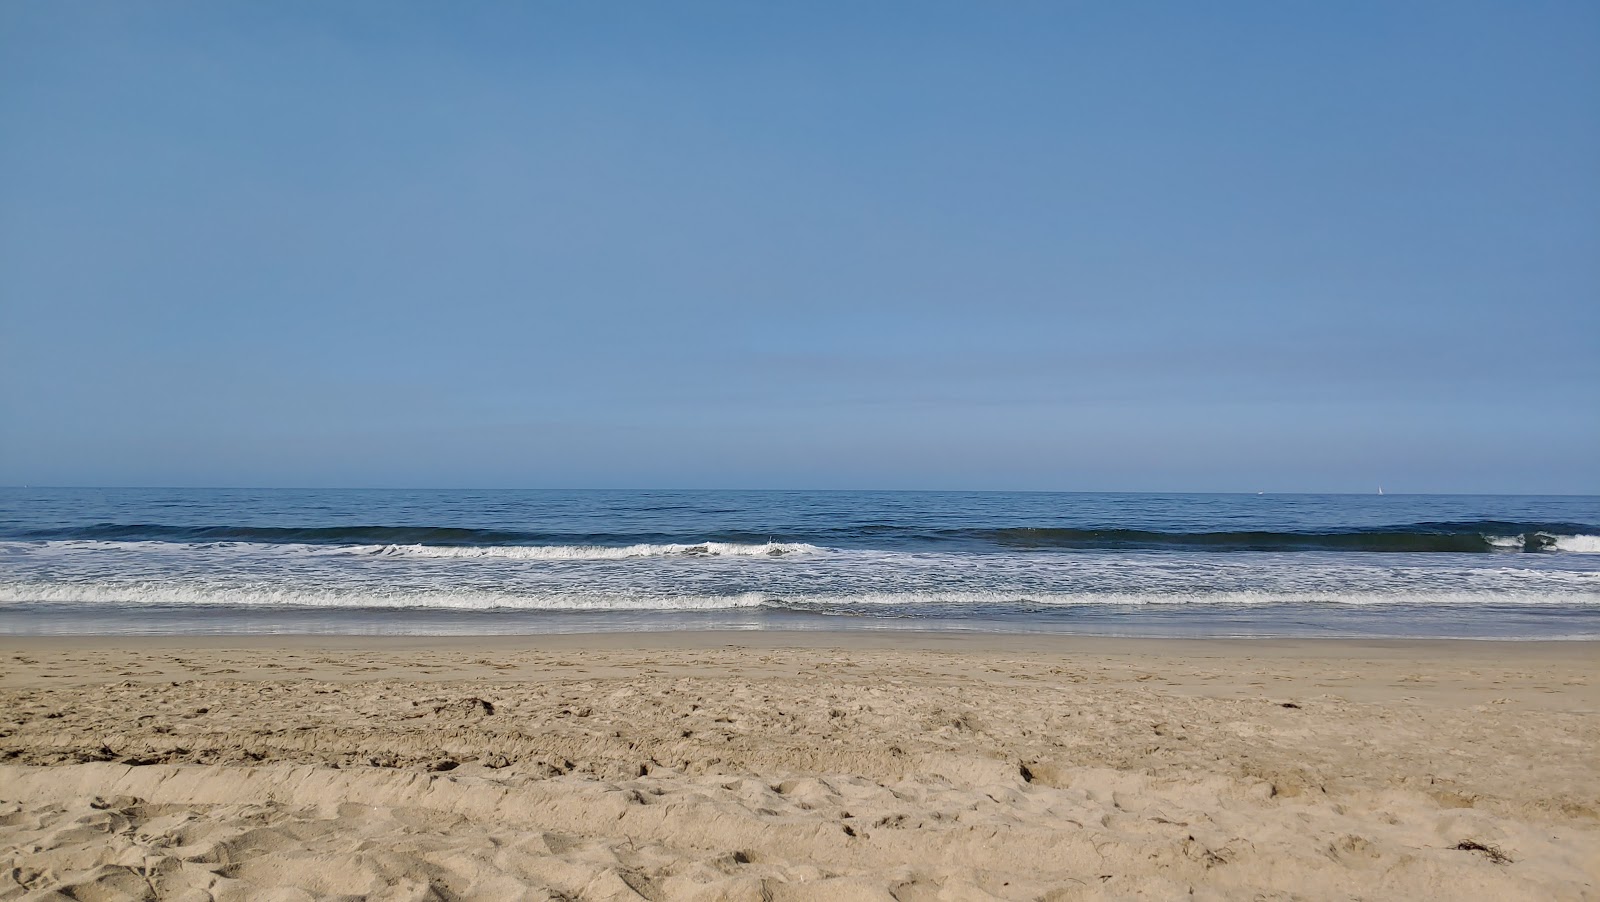 Foto di Dunes Beach ubicato in zona naturale